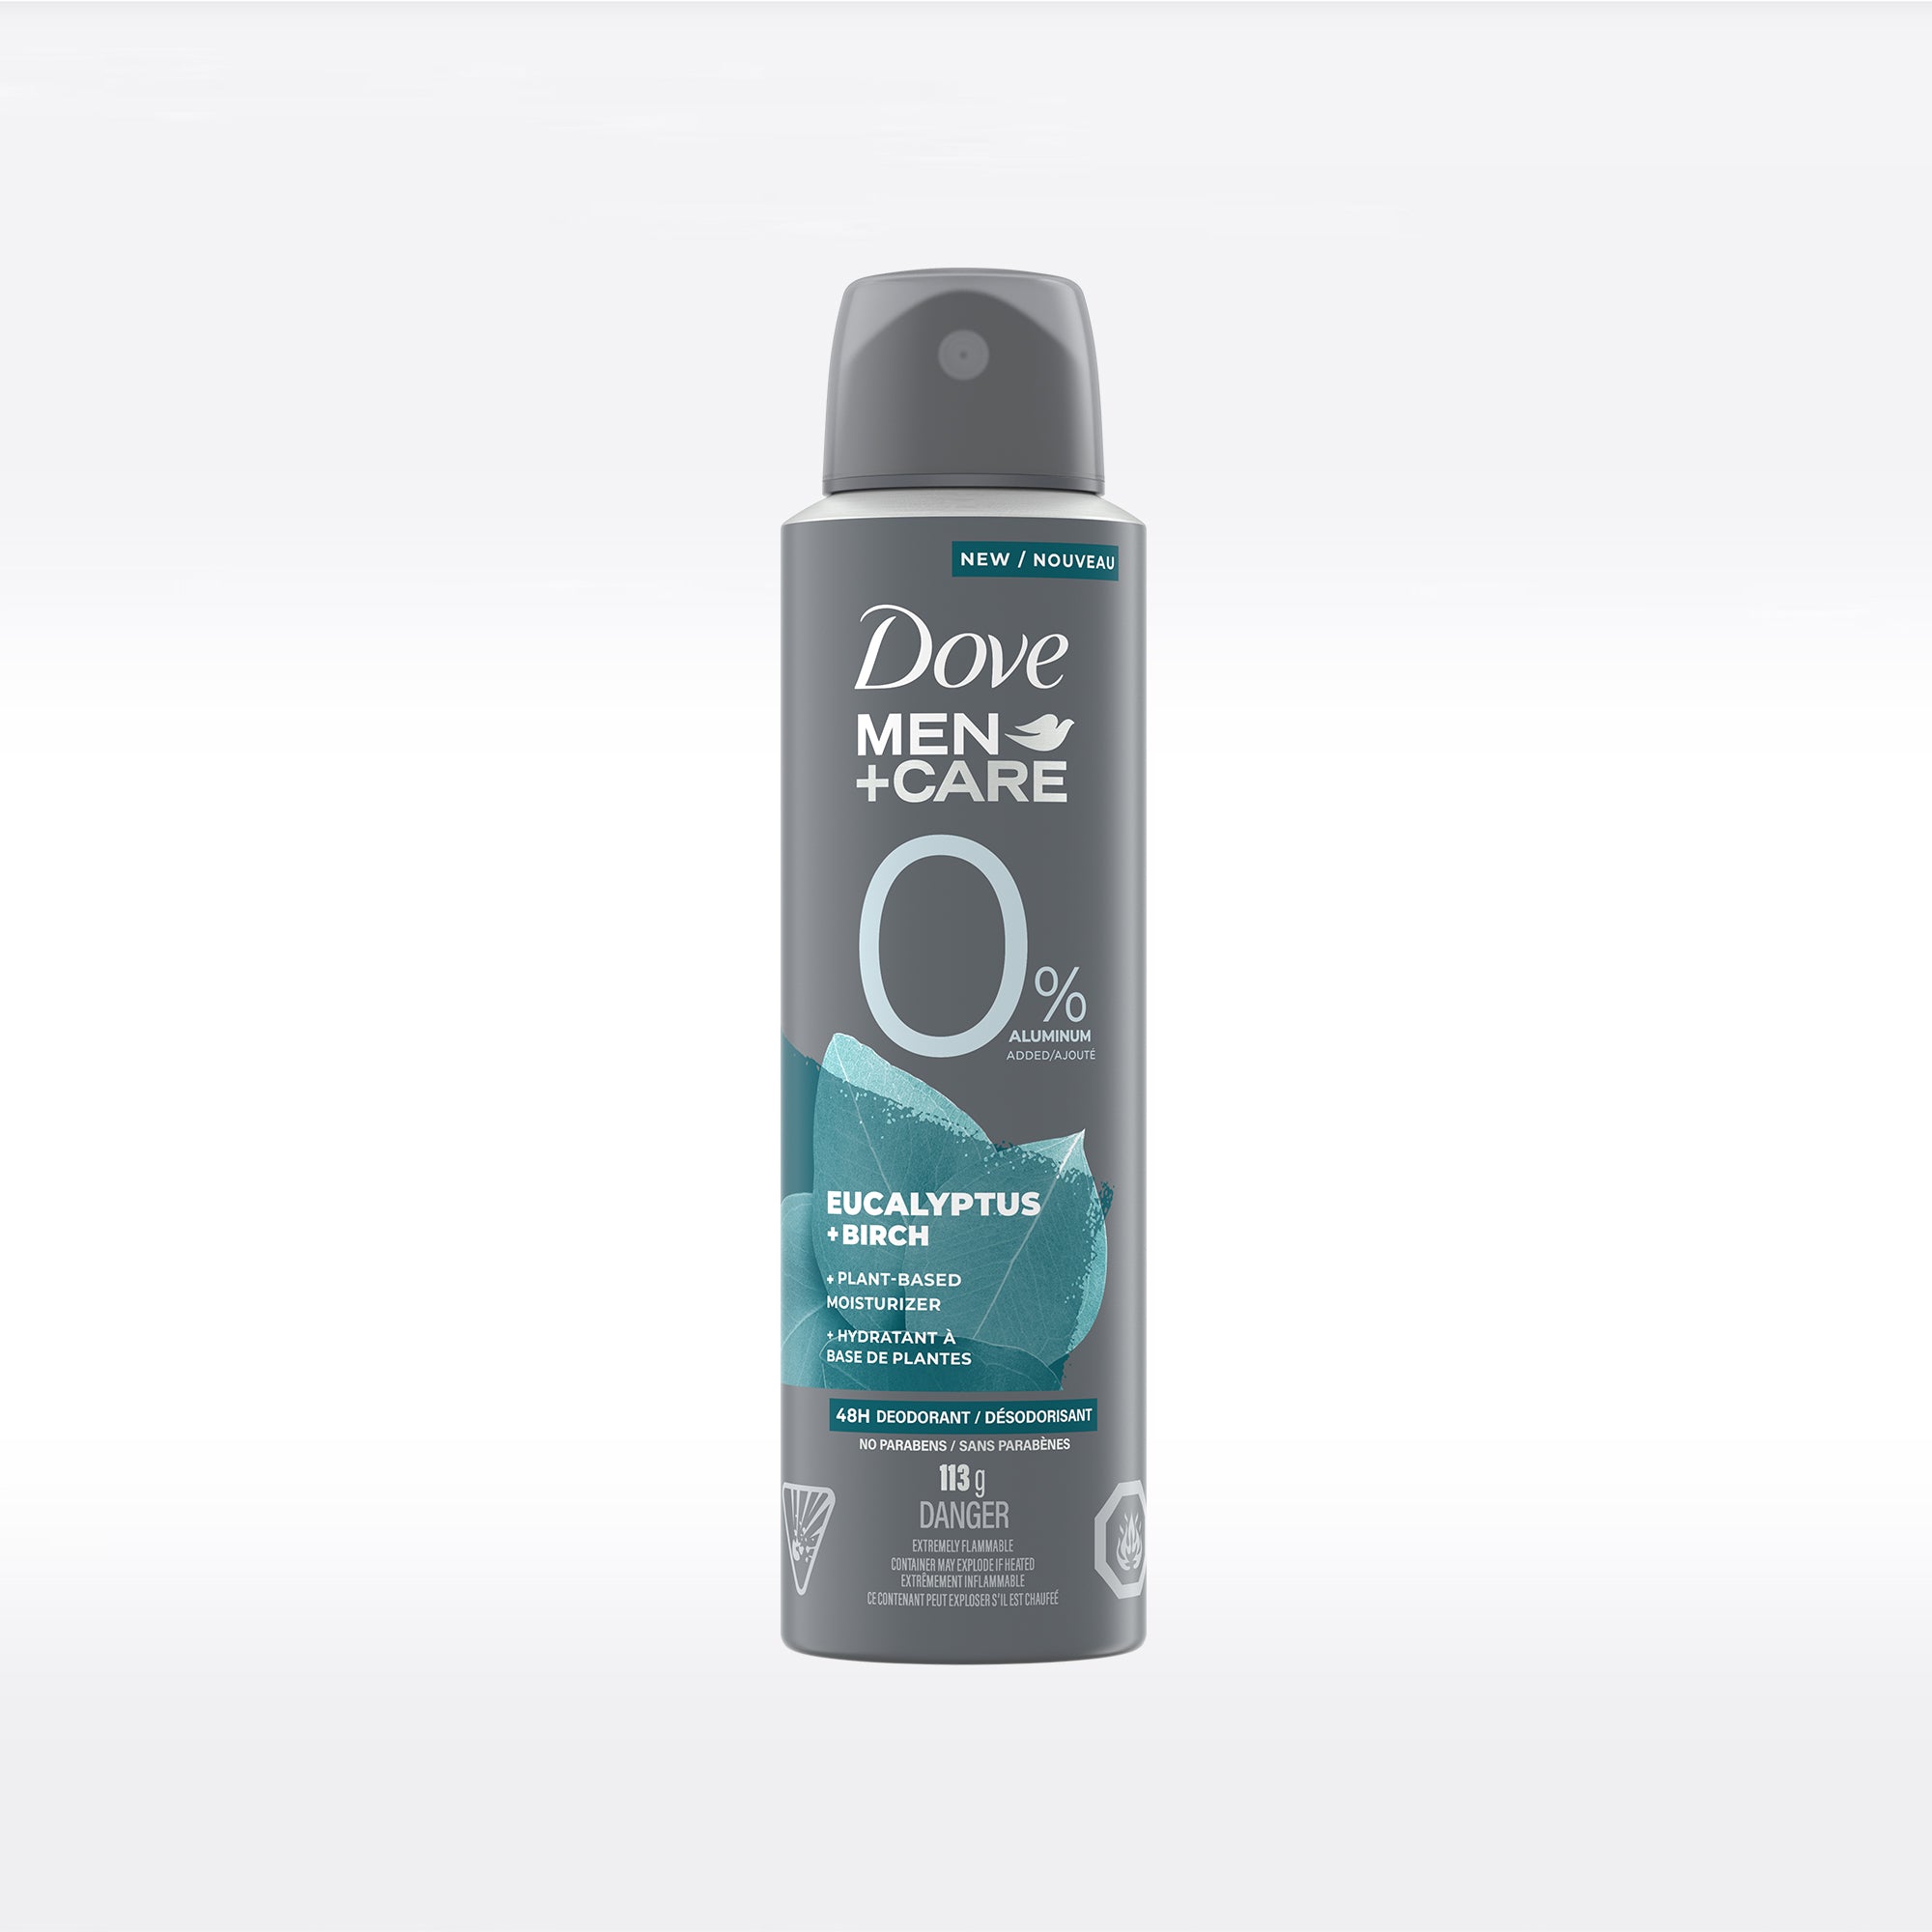 Dove Men+Care 0% Aluminum Eucalyptus + Birch Deodorant Dry Spray